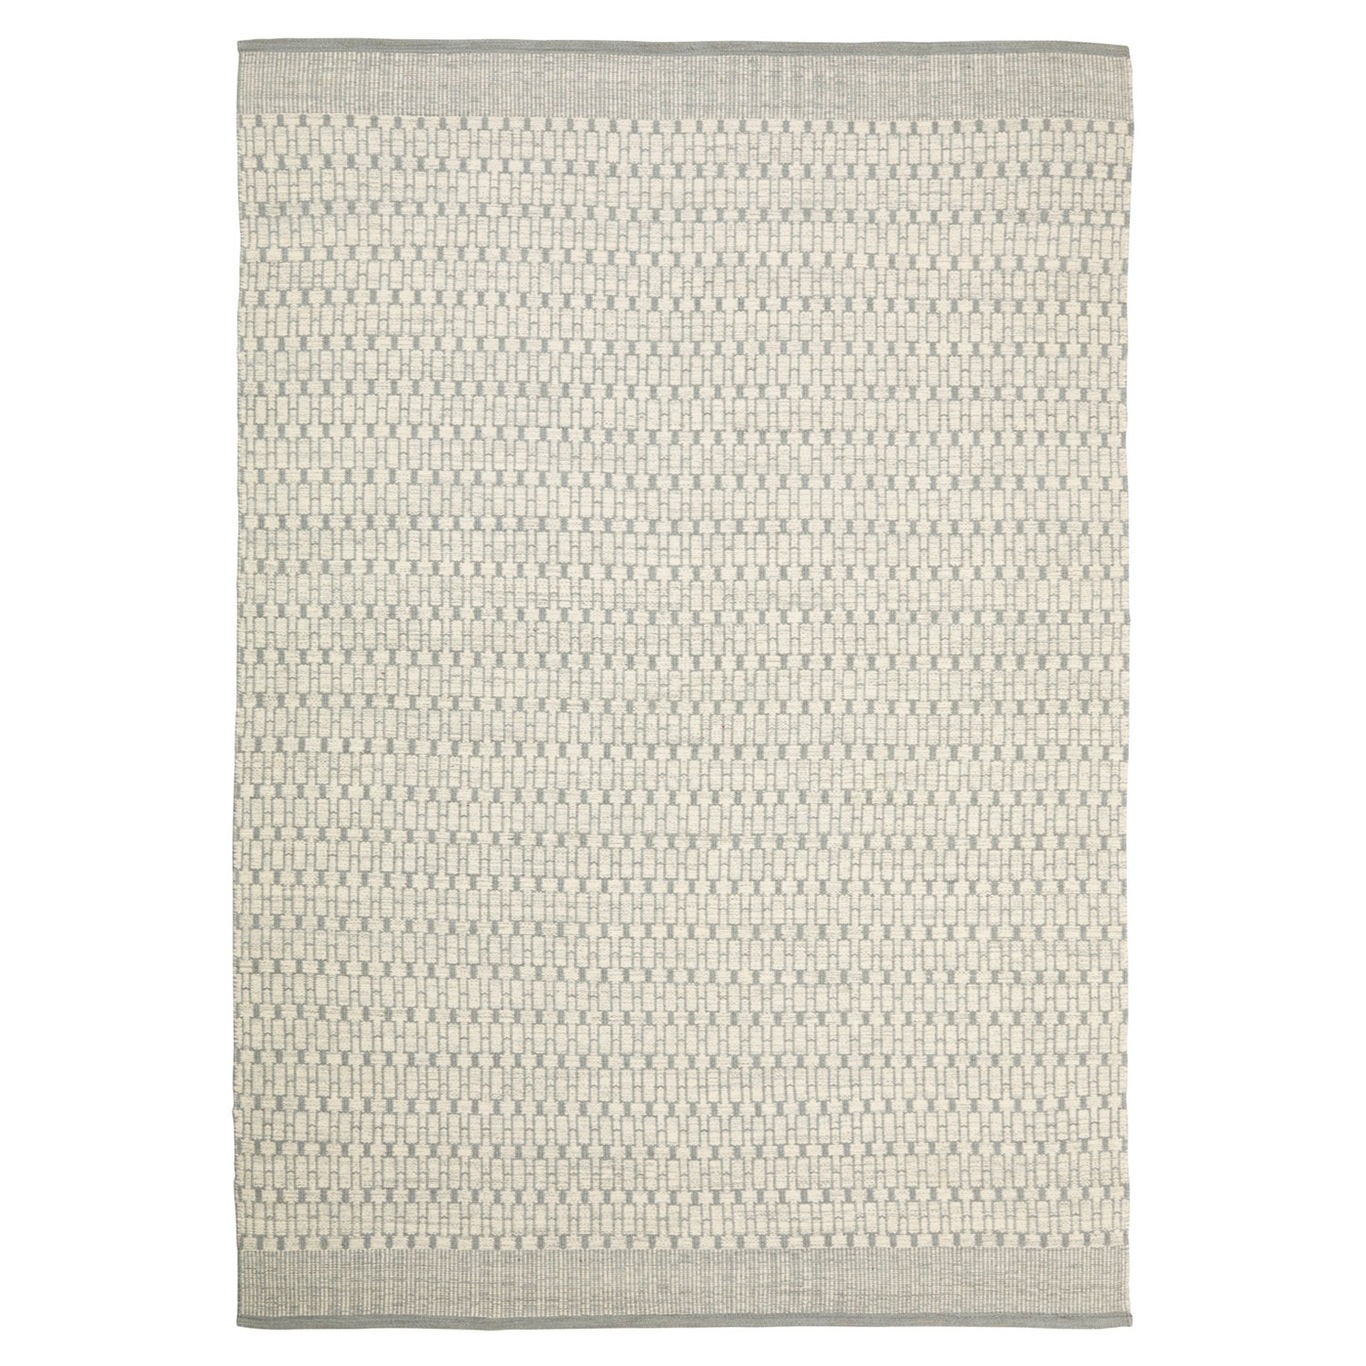 Dhurry Wool Mahi Rug 170x240 cm, Off White/Light Grey